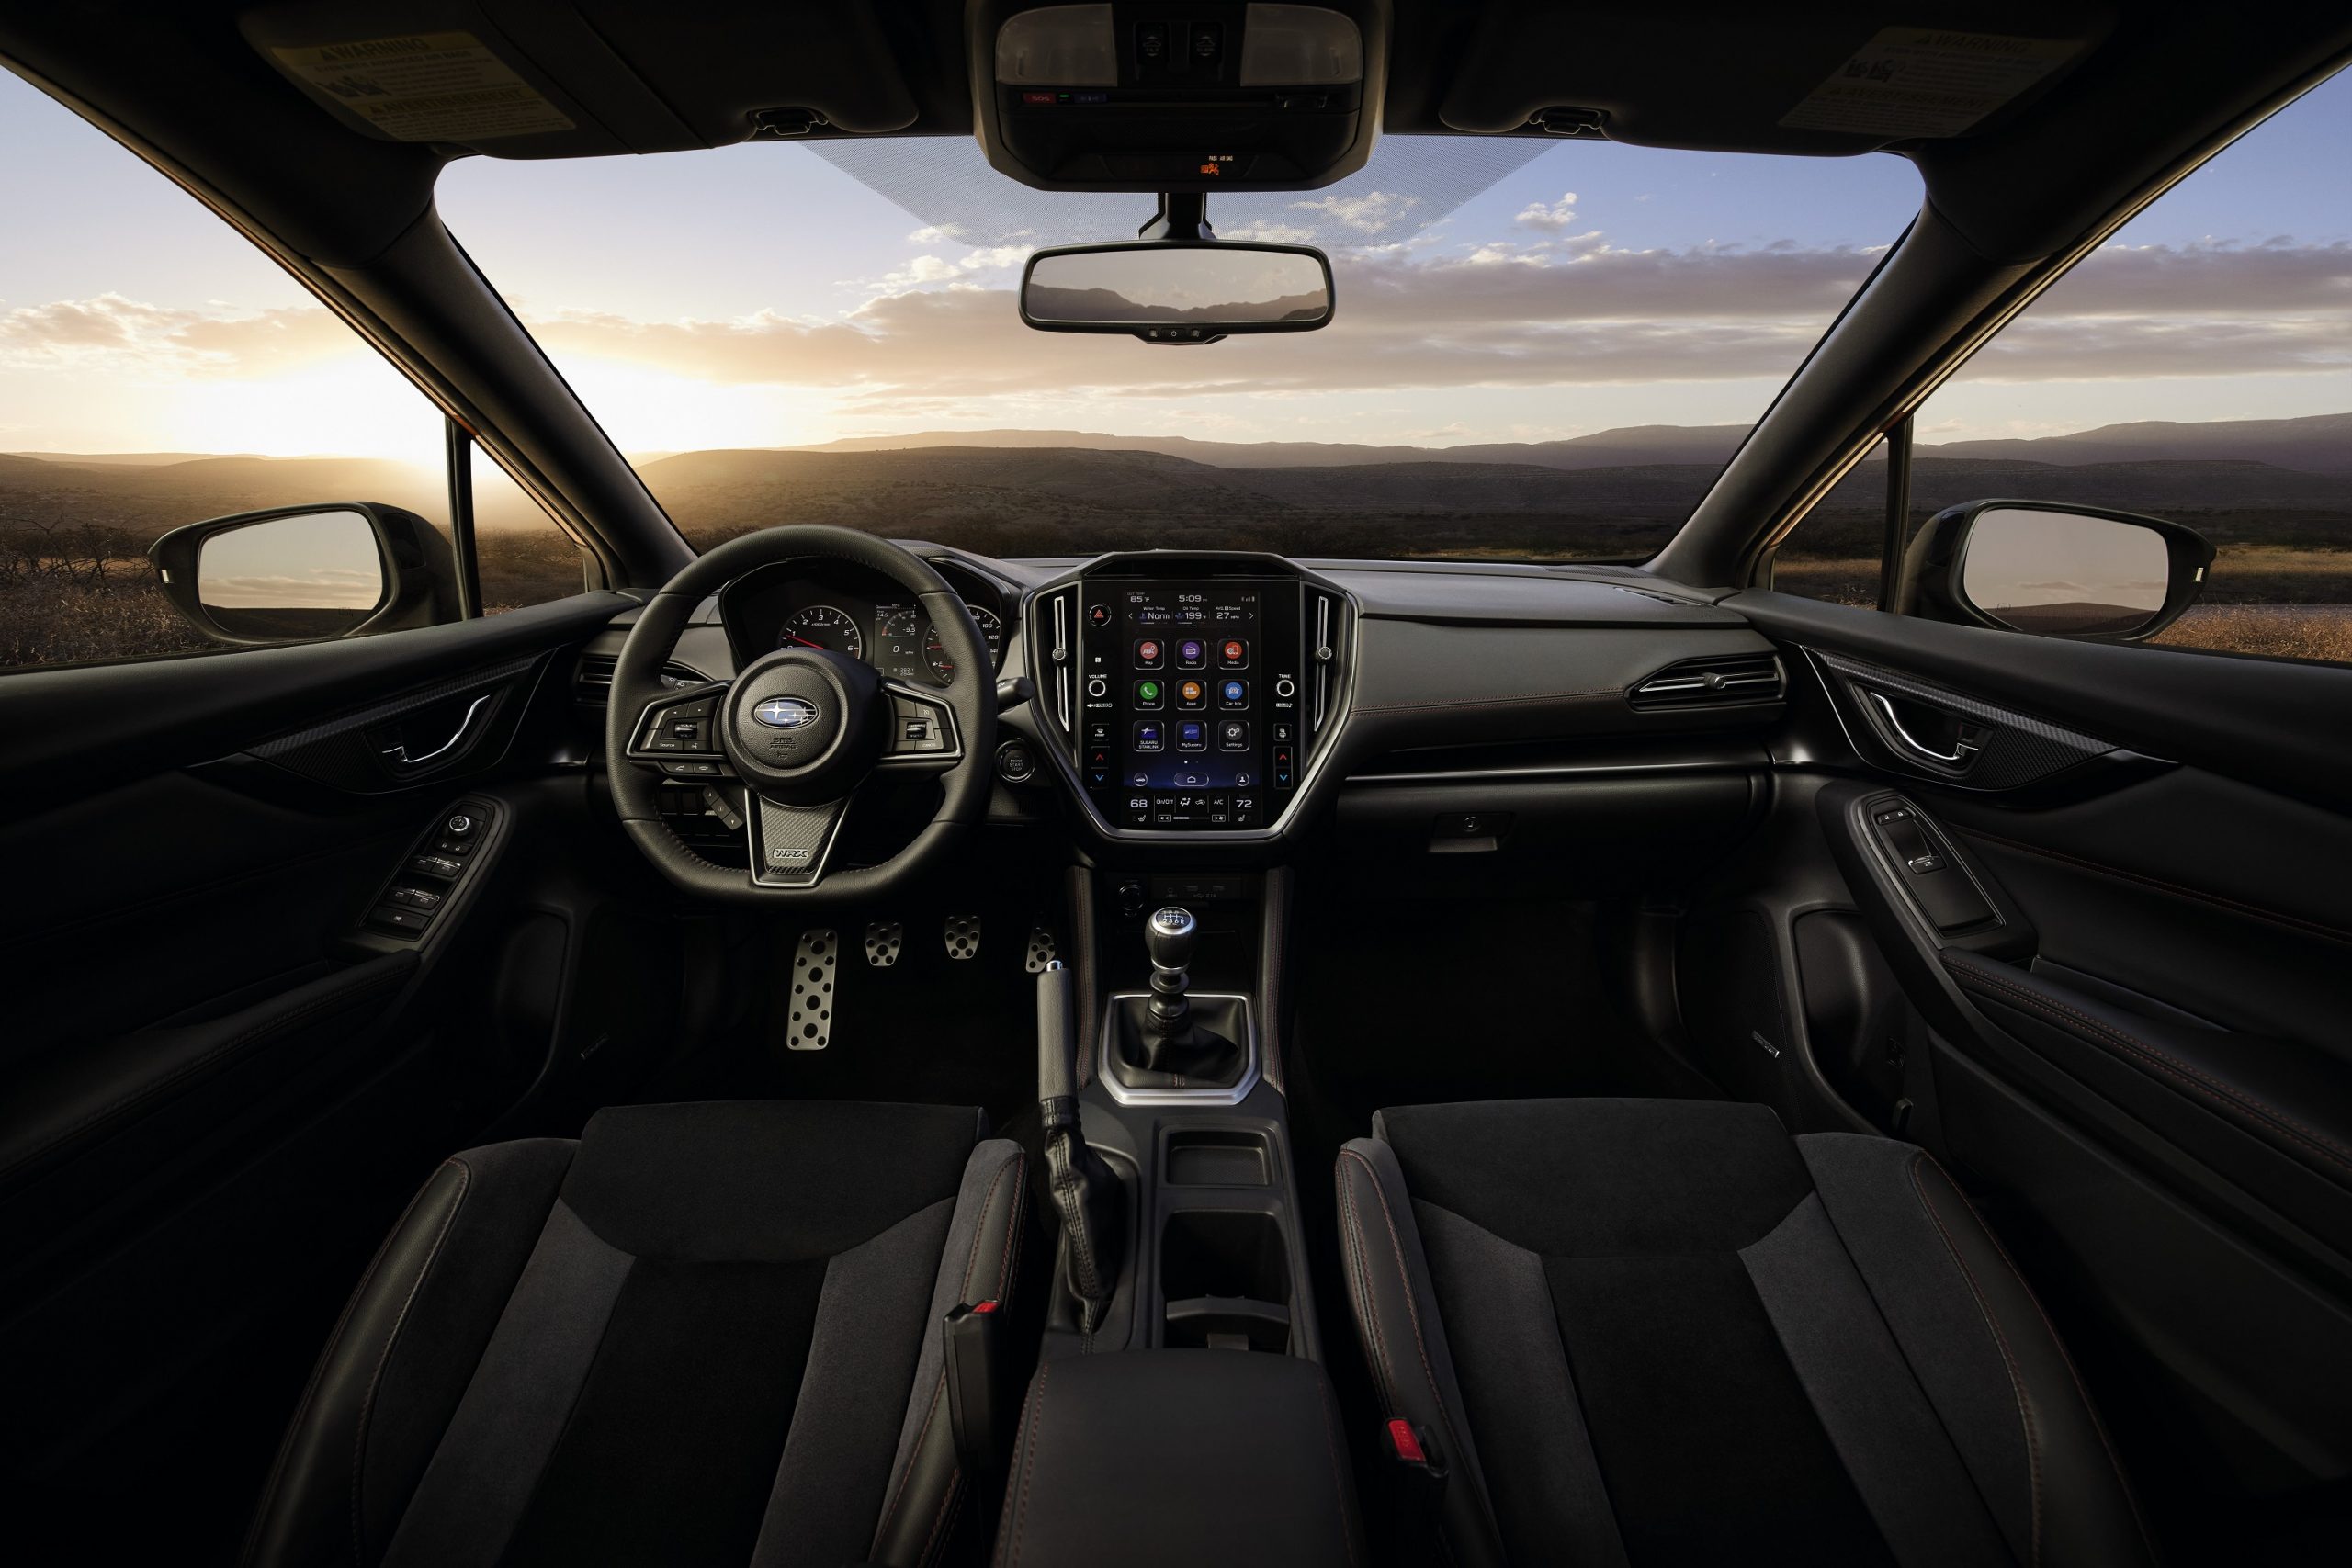 The interior of the new Subaru WRX